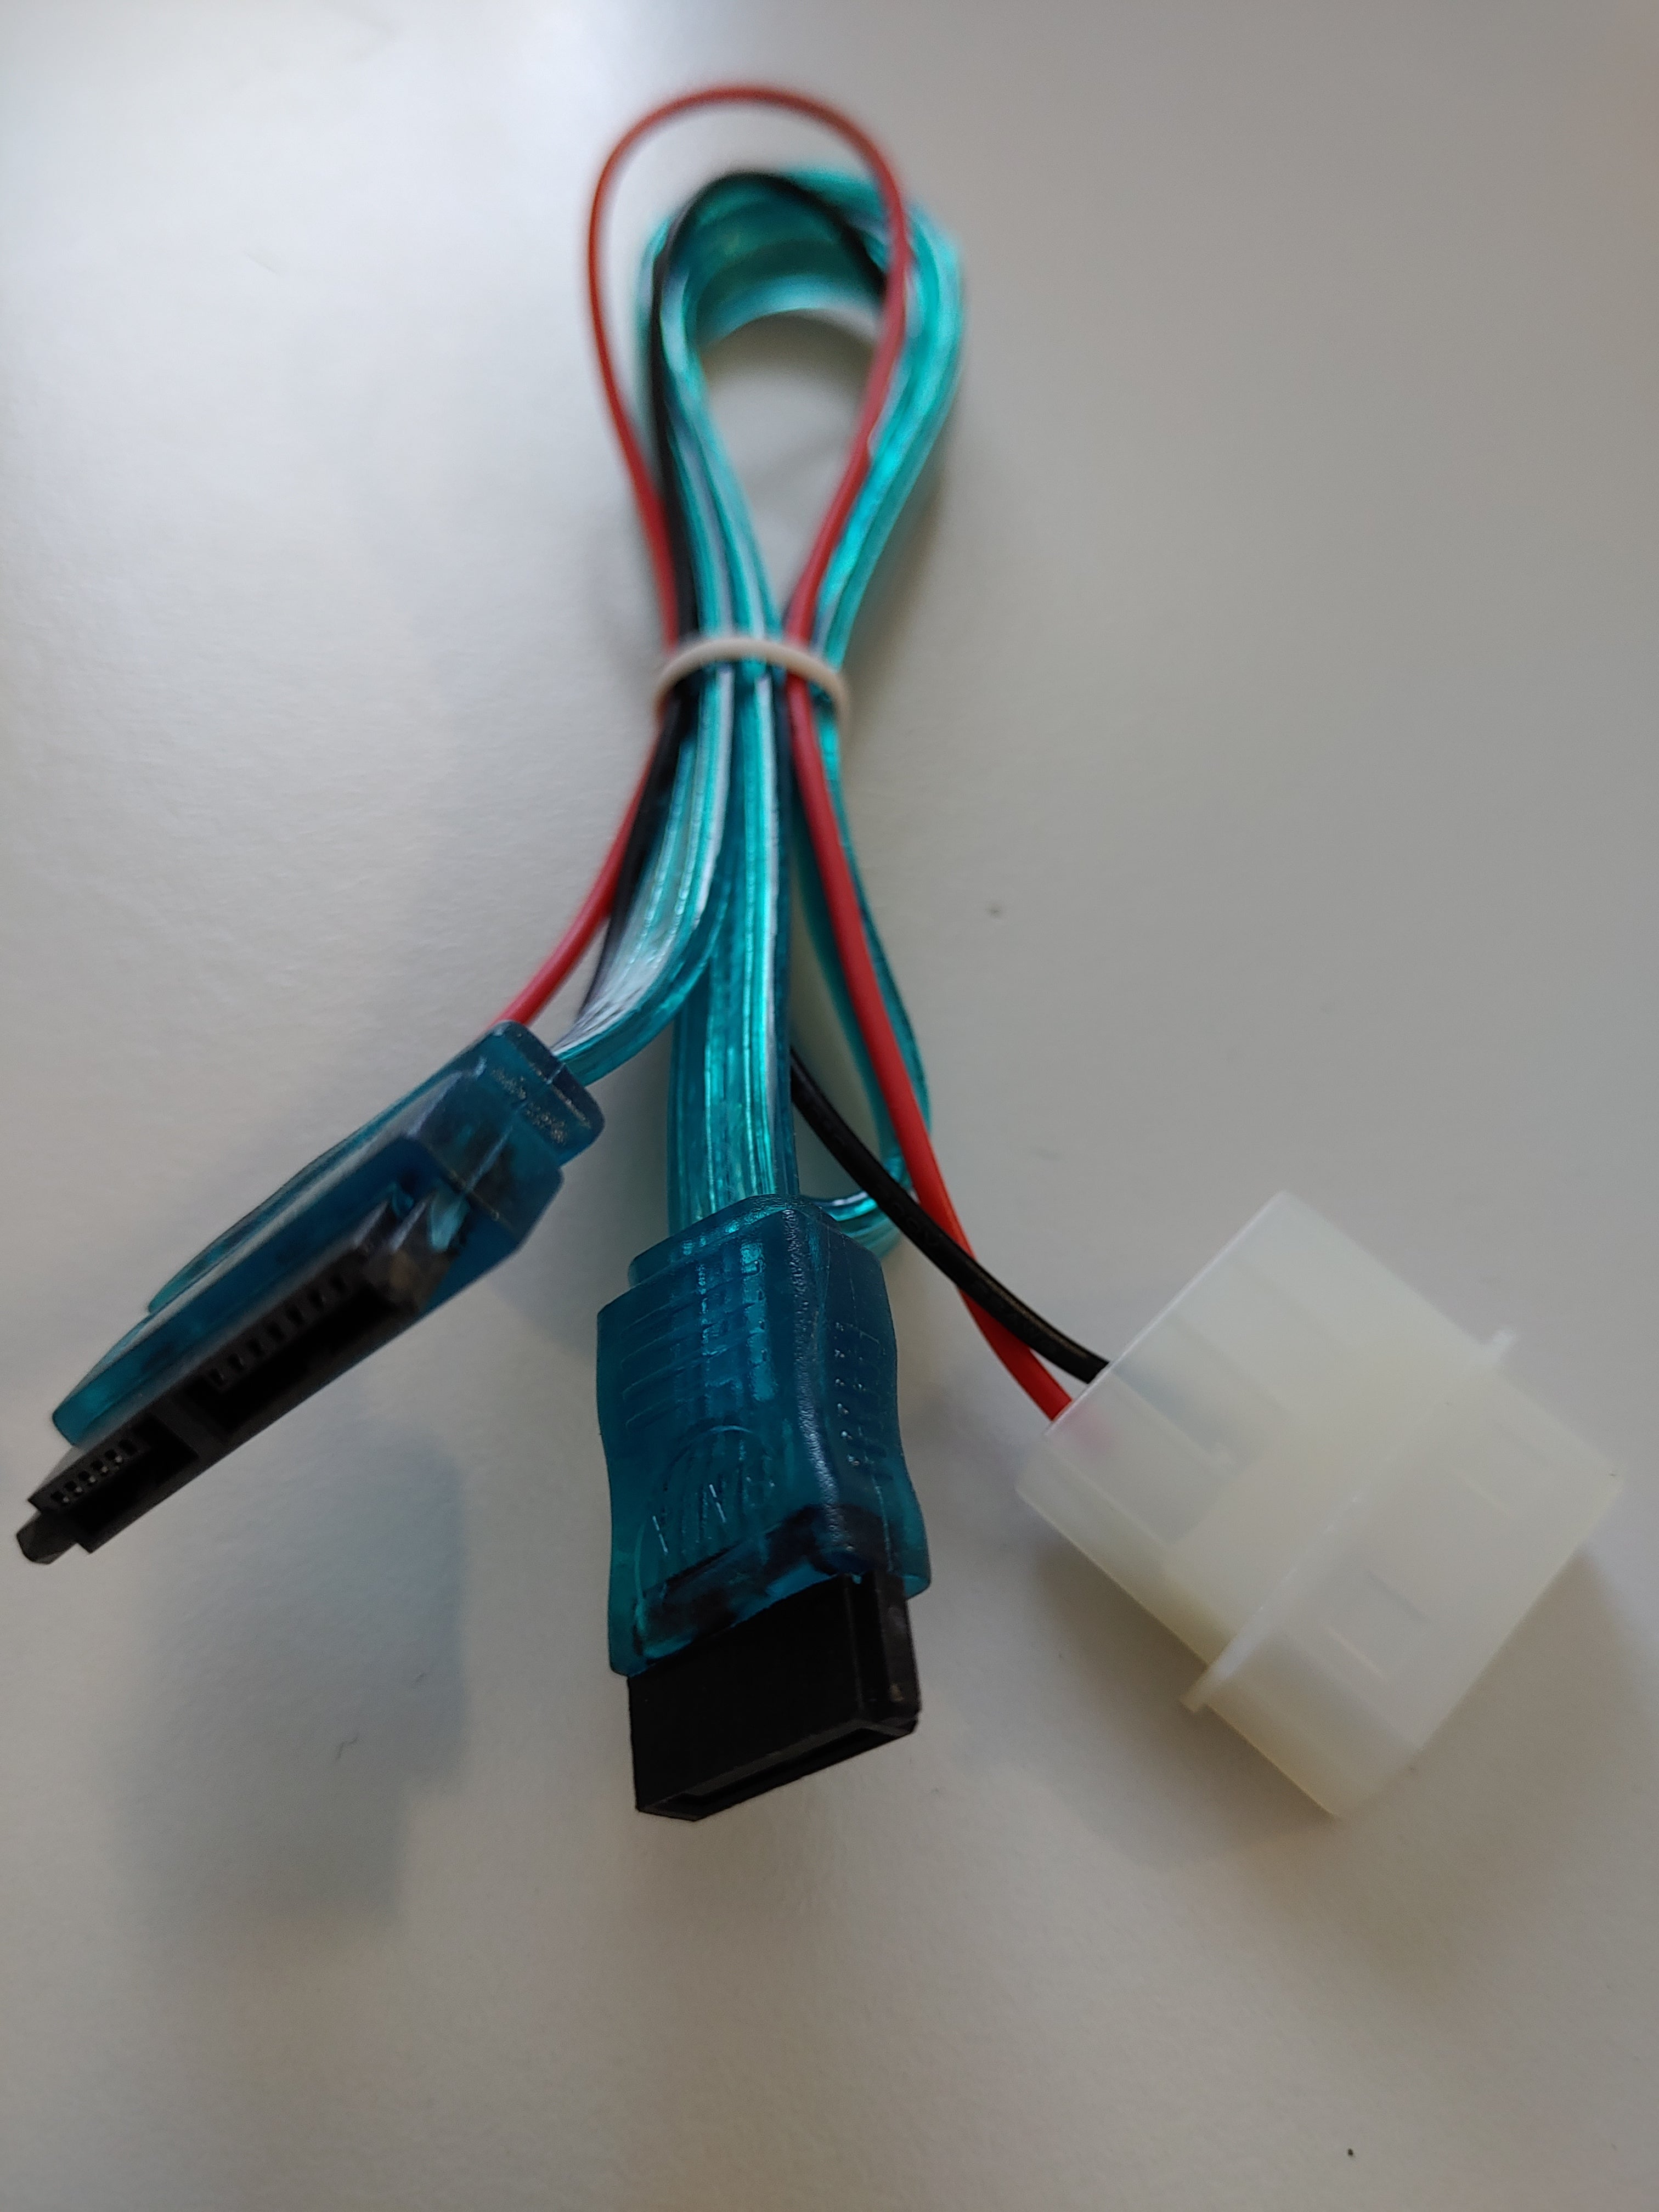 SATA Adapterkabel für Slimline CD / DVD Laufwerke ( Farbe Blau ) | #Elektroniktrade.ch#